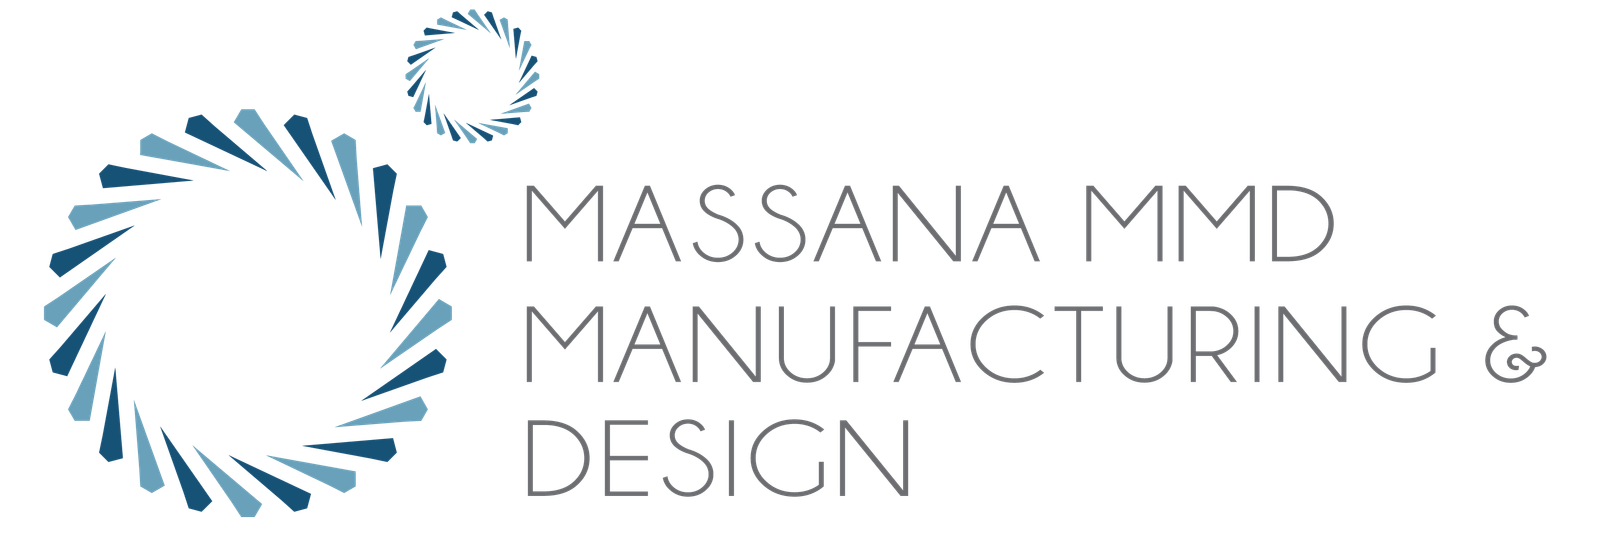 Massana MMD Manufacturing & Design